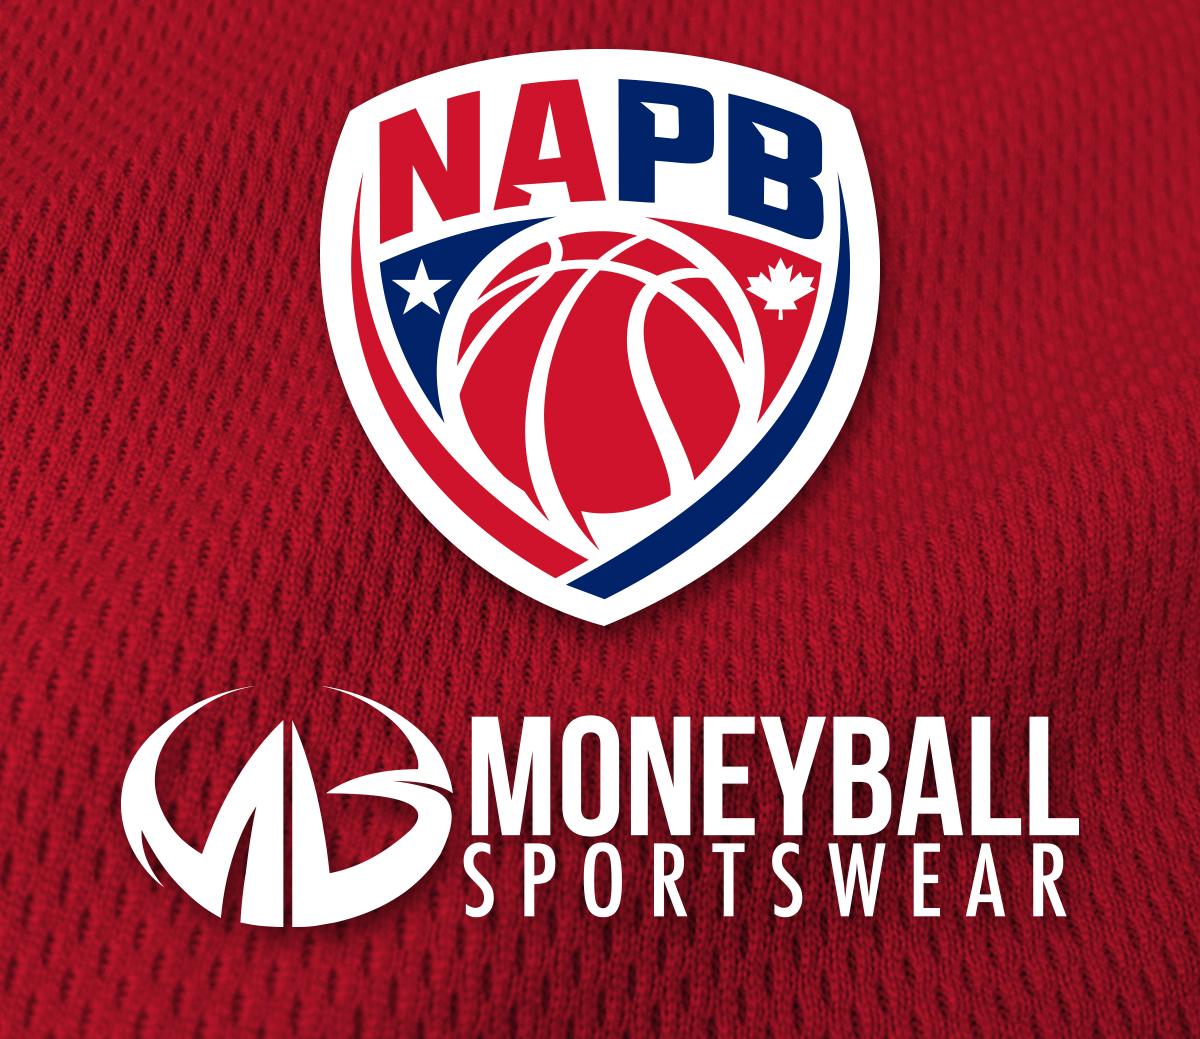 Napb Logo - NAPB Partners With Moneyball Sportswear